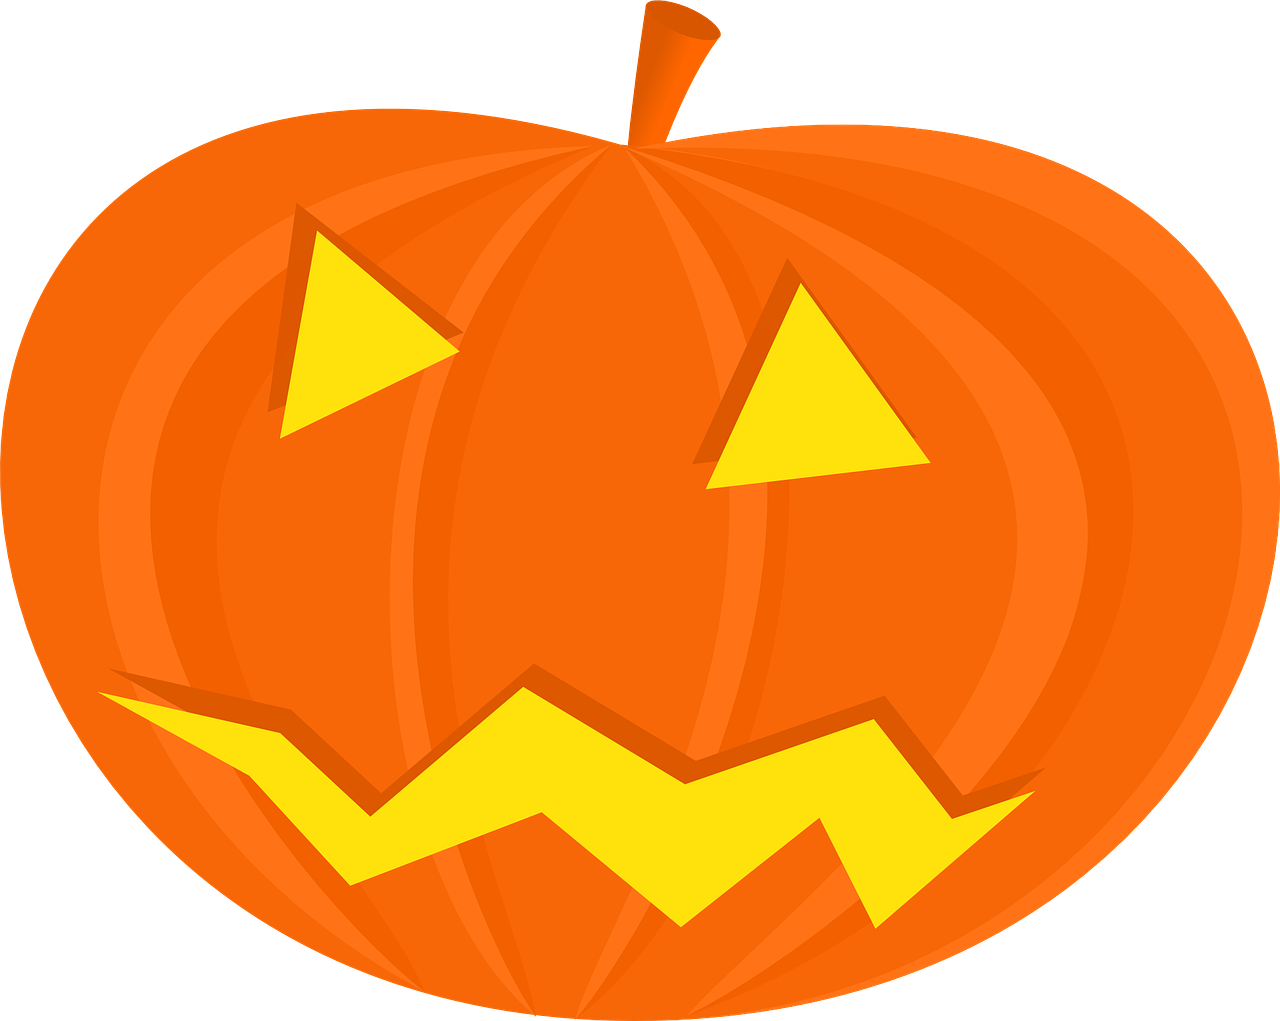 Abóbora de Halloween Download PNG Image